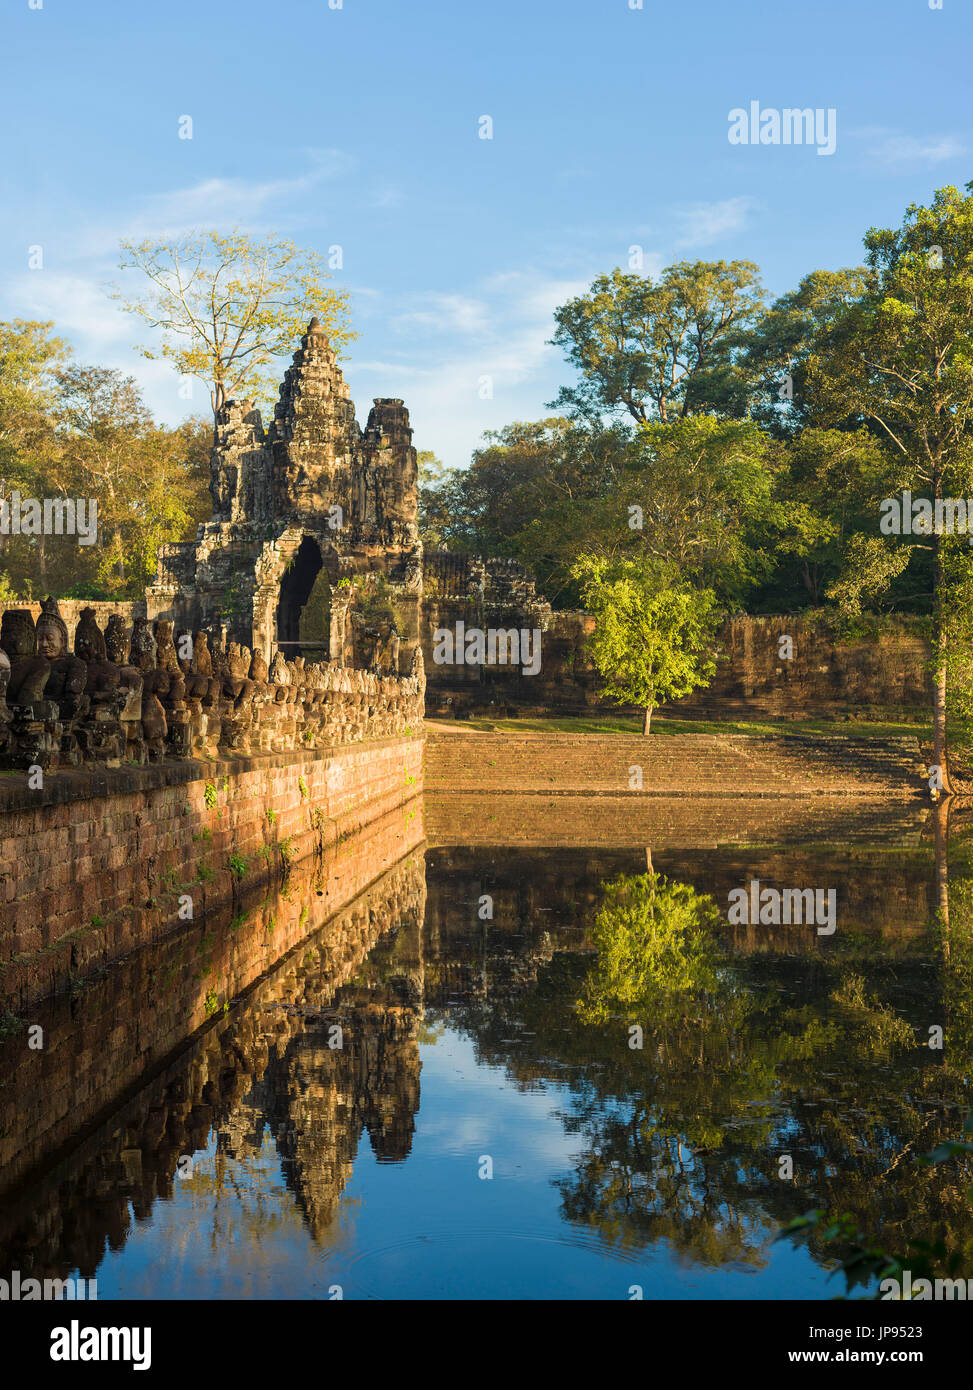 Southern Entrance to Angkor Thom, Siem Reap, Cambodia, Stock Photo